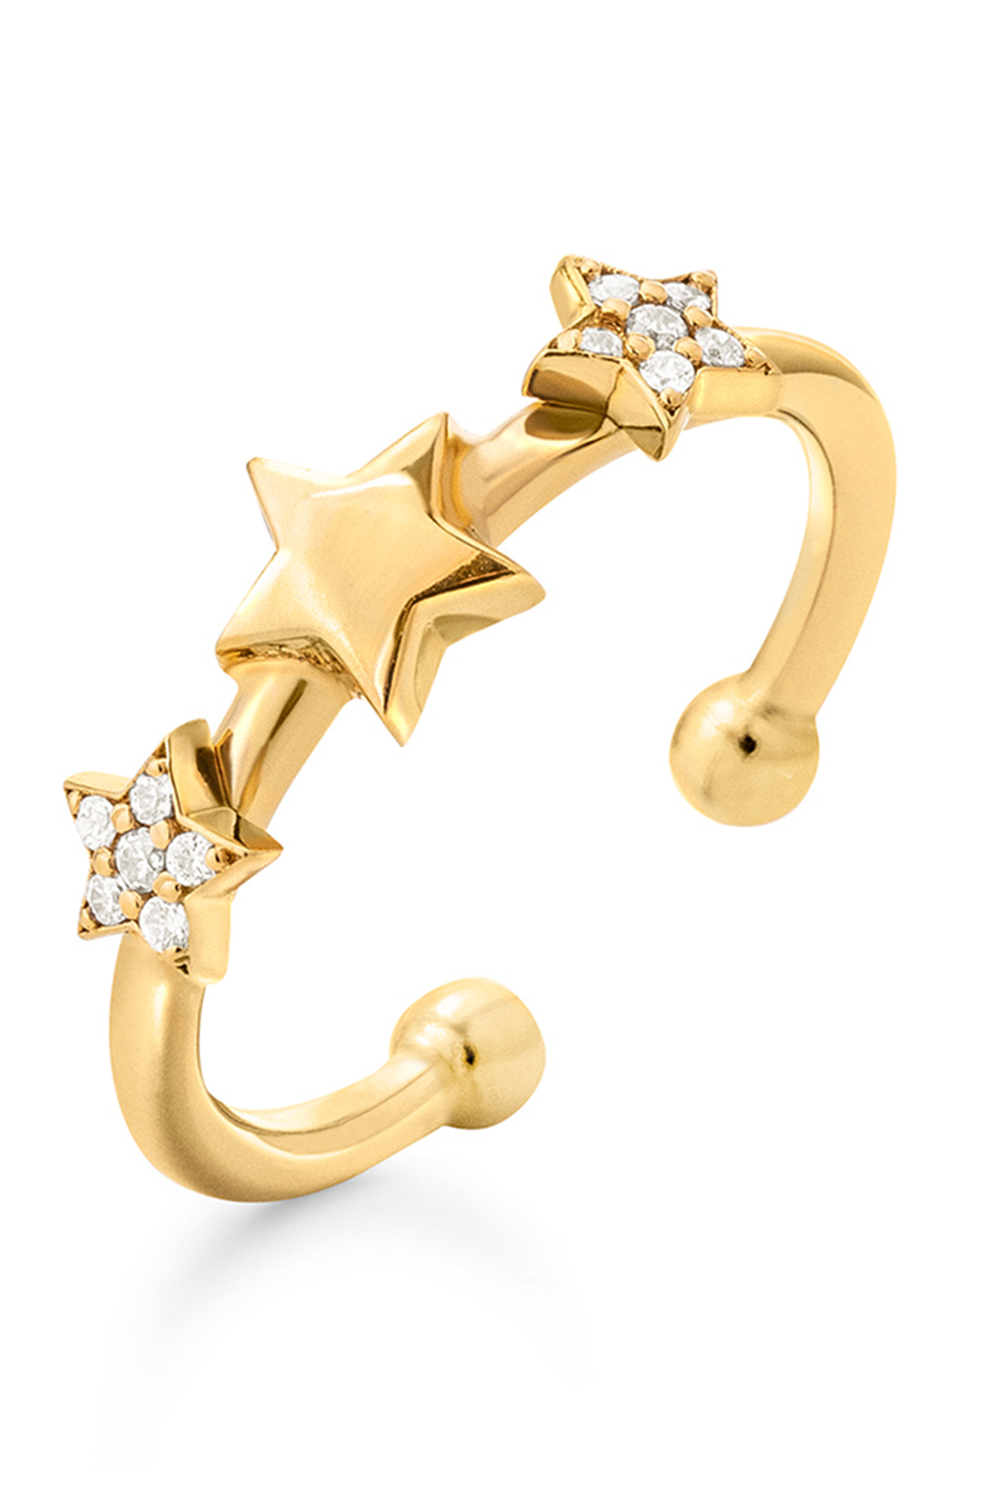 FOLLI FOLLIE – Γυναικείο ασημένιο δαχτυλίδι FOLLI FOLLIE WISHING ON χρυσό 3R19S138YC